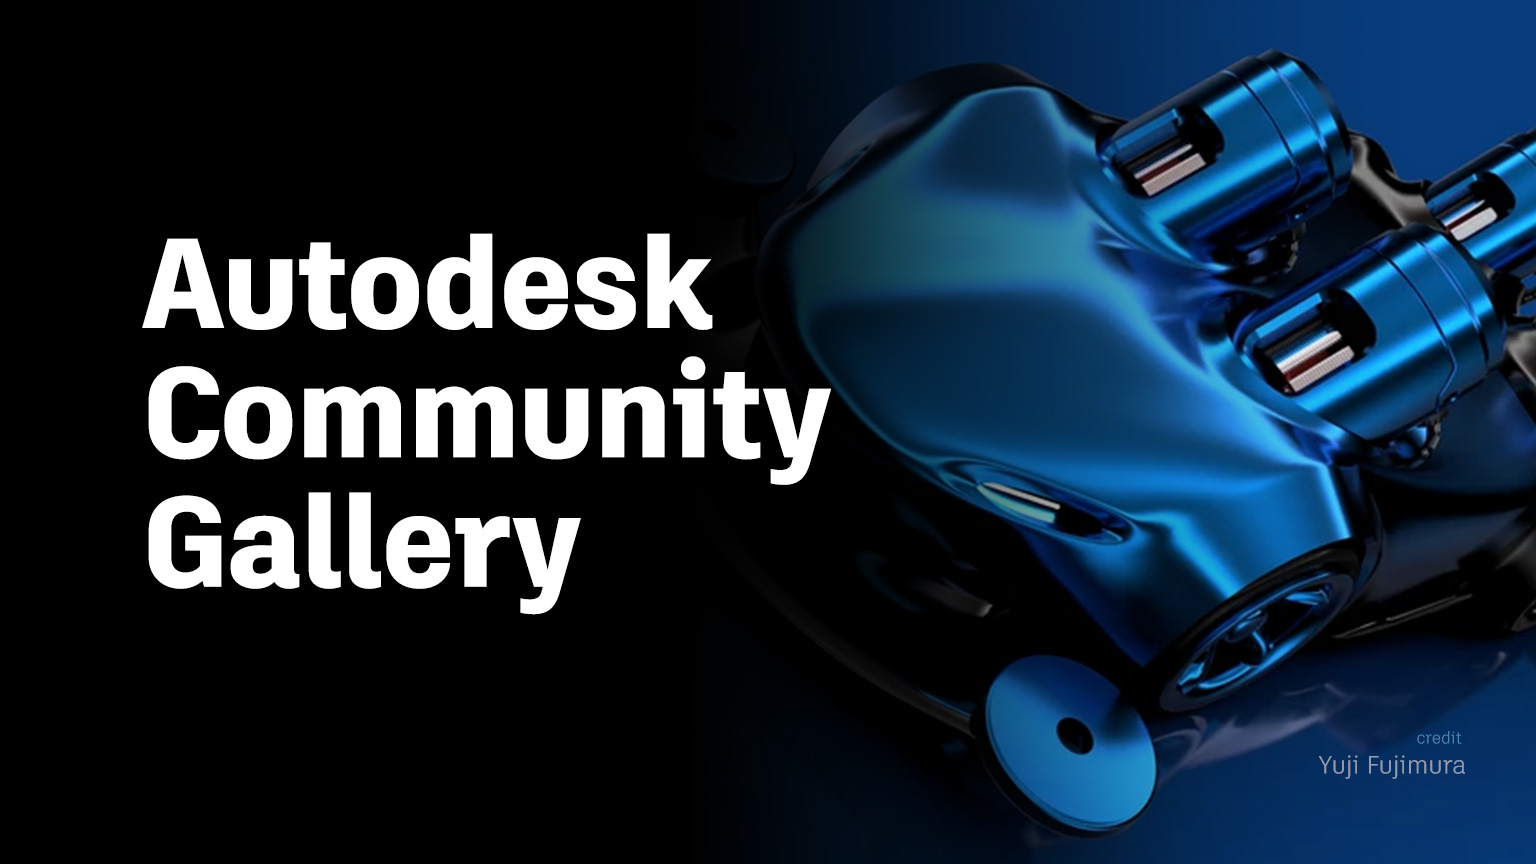 Autodesk Community Gallery